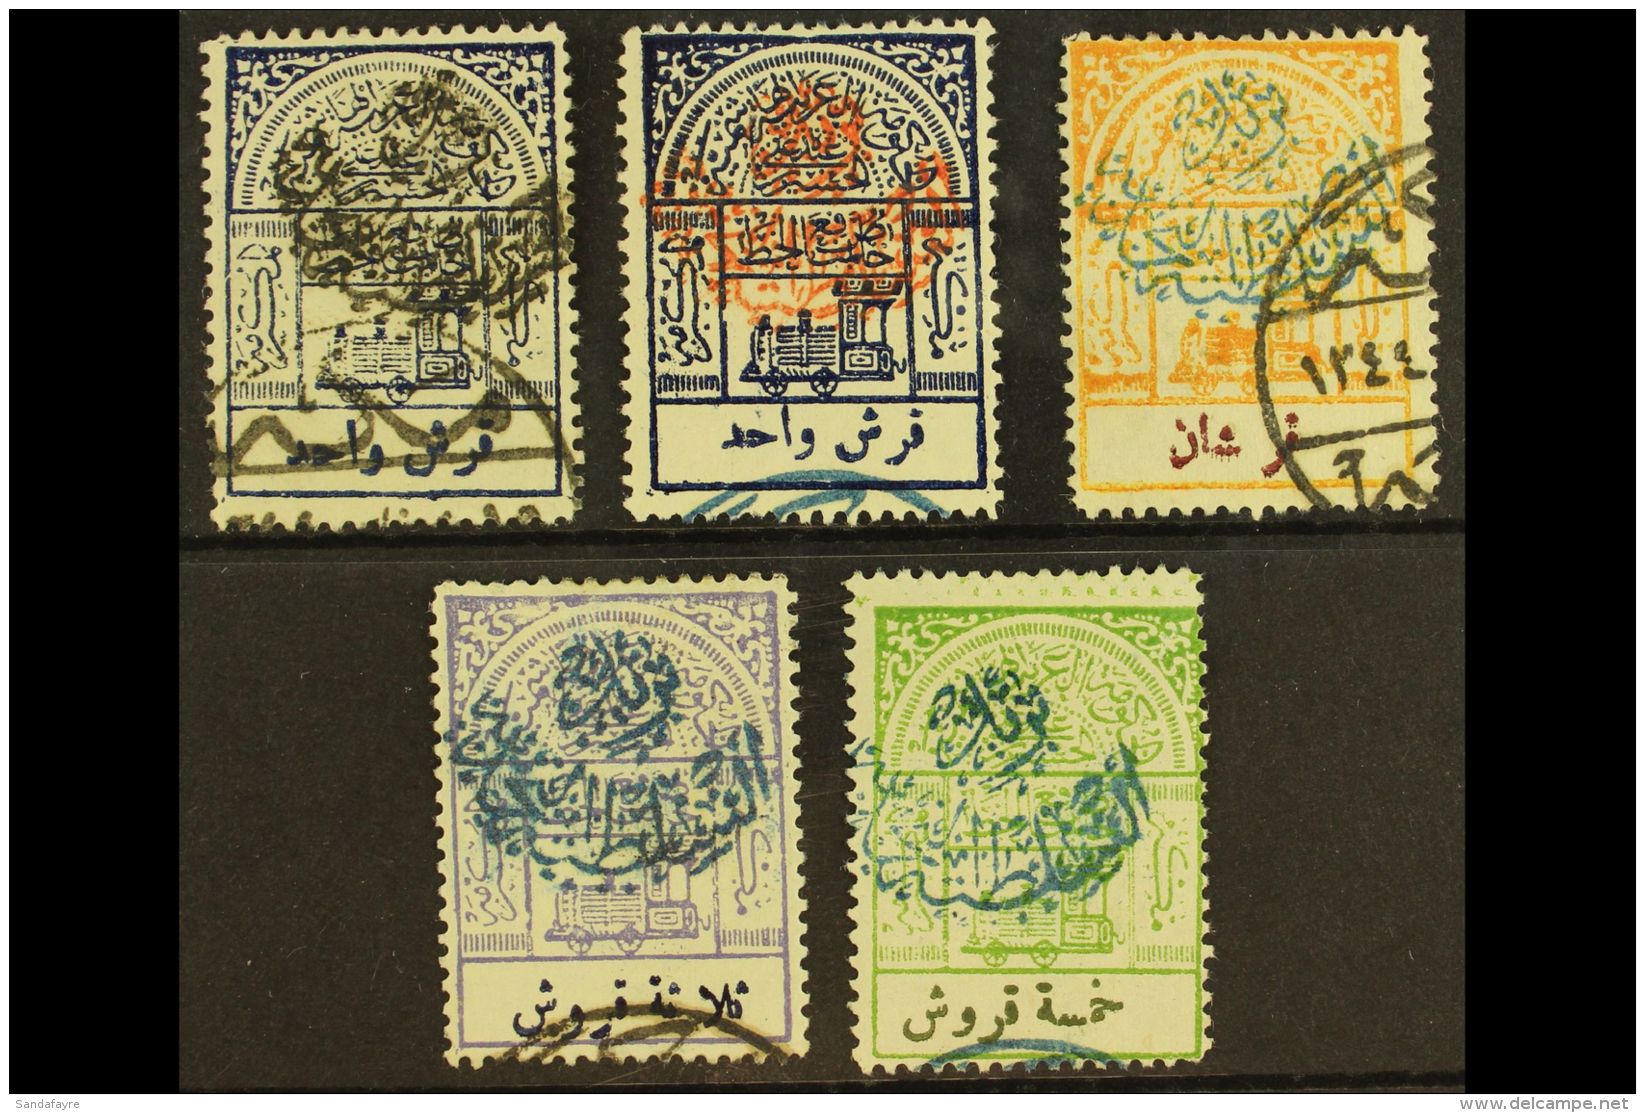 NEJDI OCCUPATION OF HEJAZ 1925 "Nejd Sultanate Post" Overprints On Hejaz Railway Tax Stamps Complete Set Inc Both... - Arabia Saudita